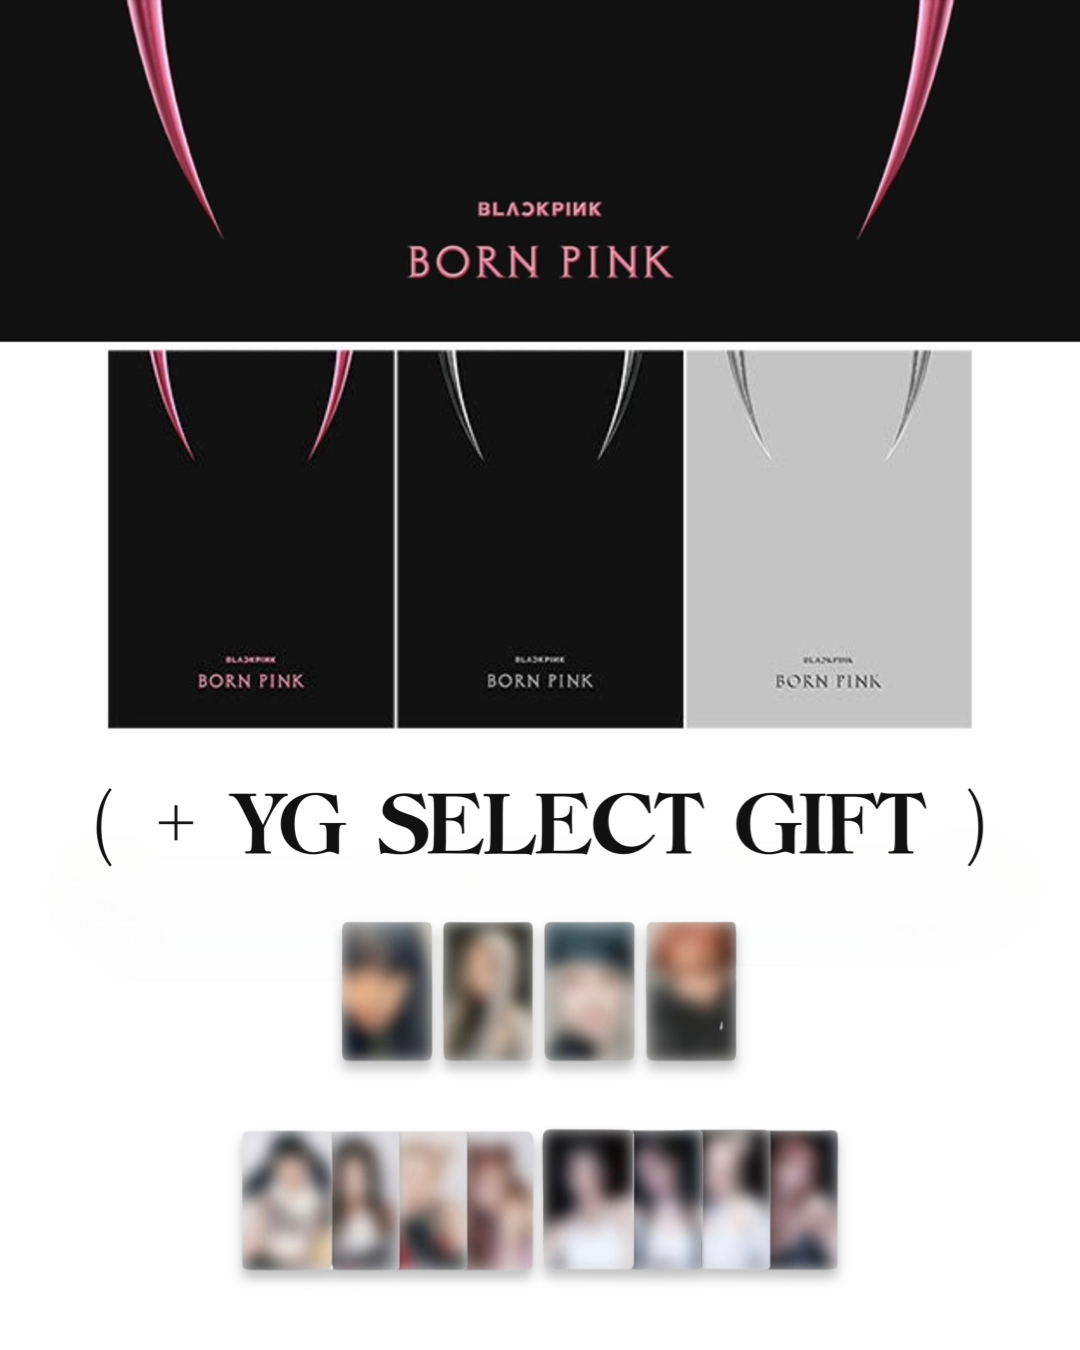 YG SELECT & KPOP MERCH Exclusive Benefit] BLACKPINK - BORN PINK 2nd A